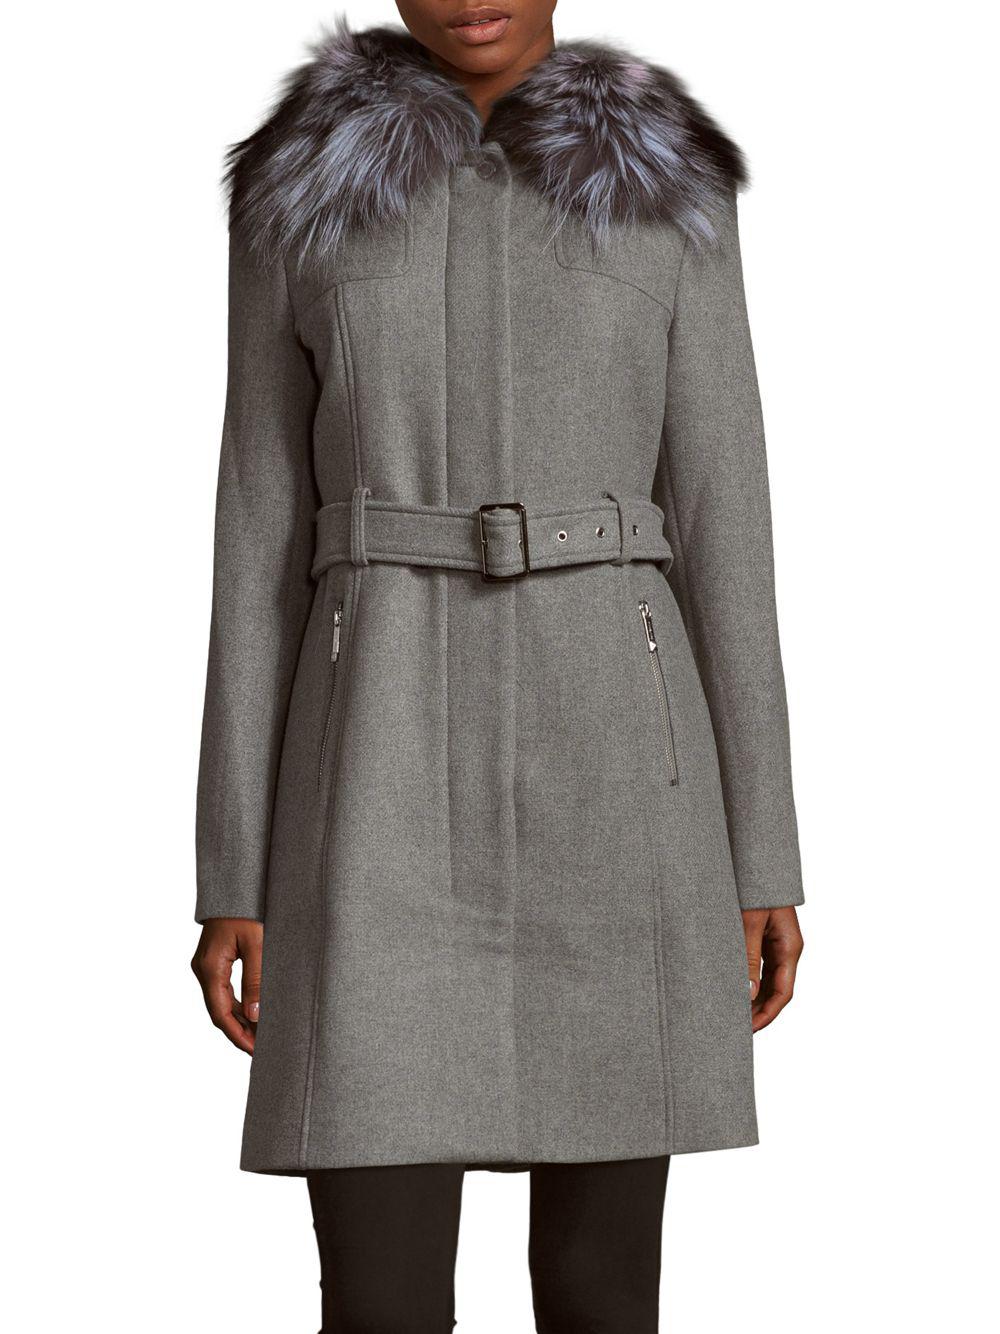 michael kors gray coat